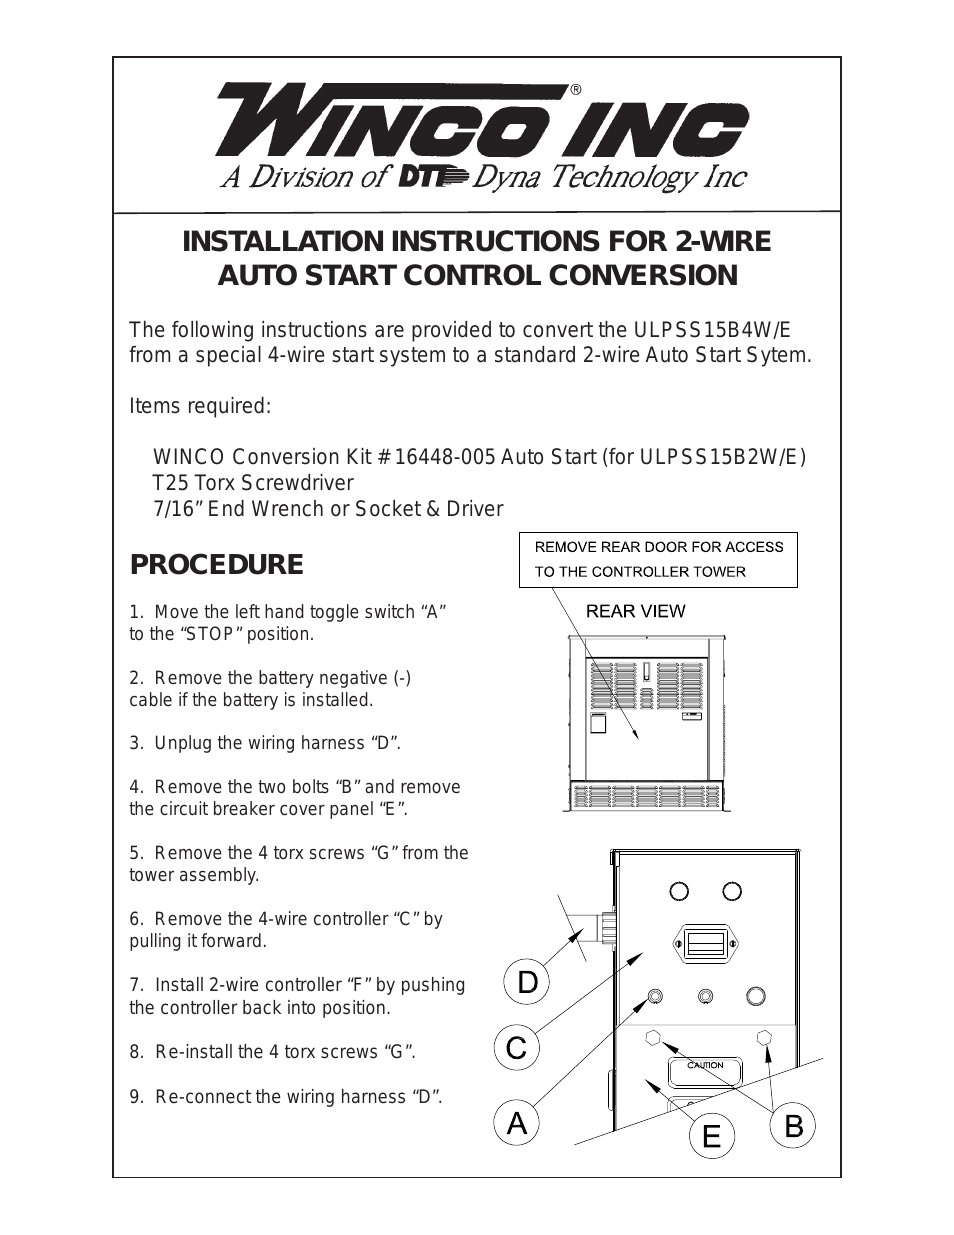 2-Wire Conversion Instructions ULPSS15B2W/E